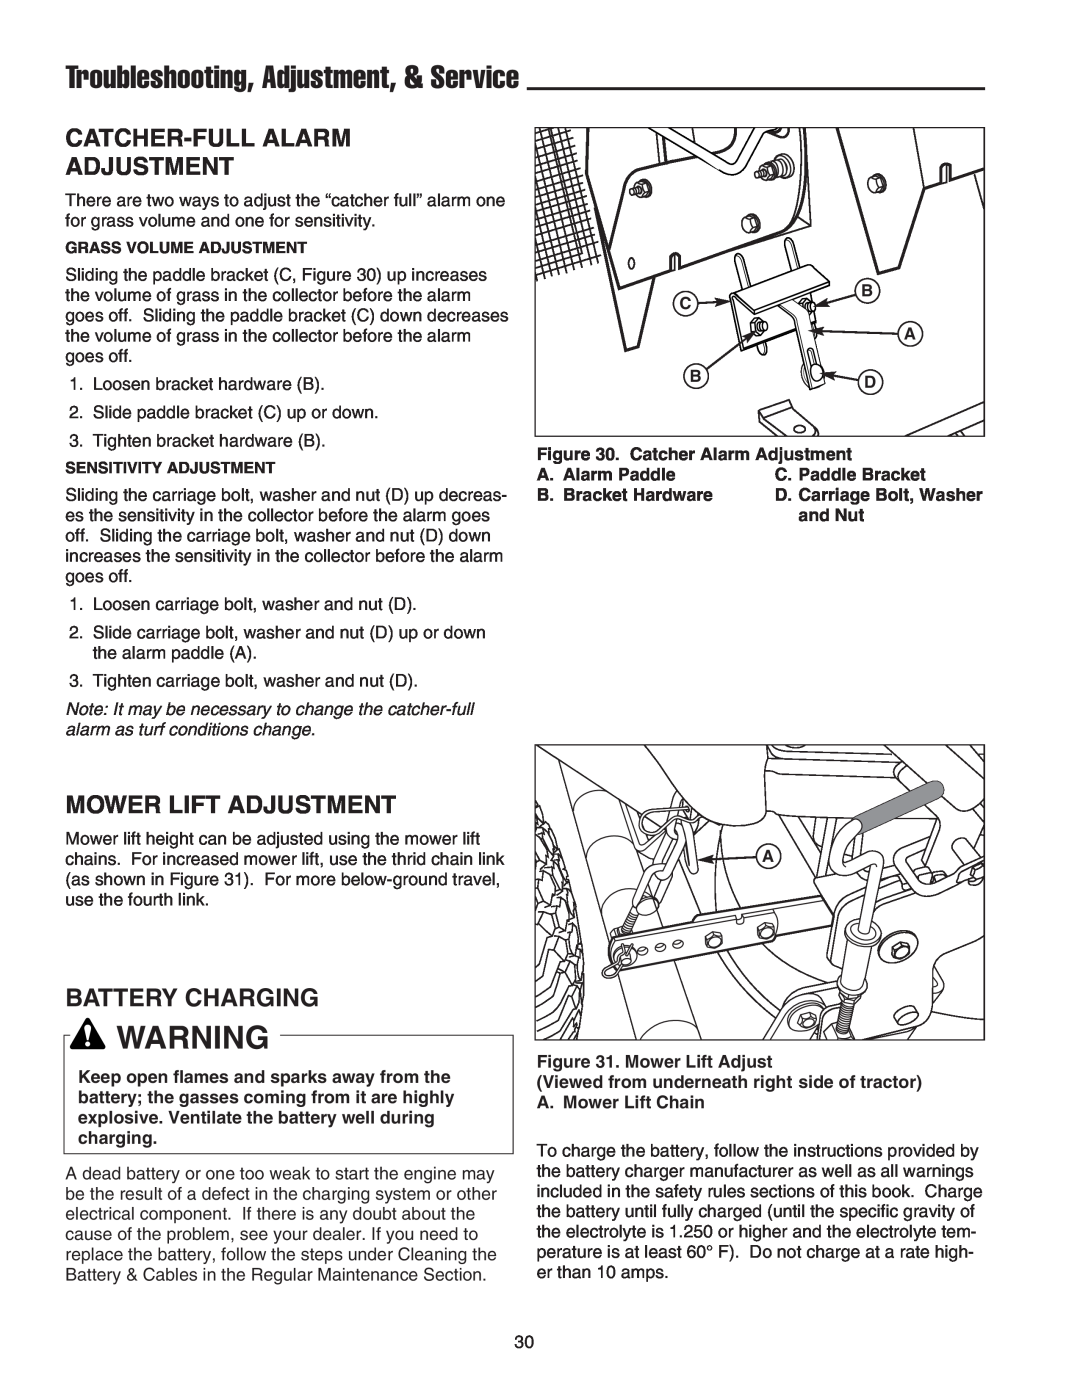 Snapper 2400 XL manual Troubleshooting, Adjustment, & Service, Catcher-Full Alarm Adjustment, Mower Lift Adjustment 